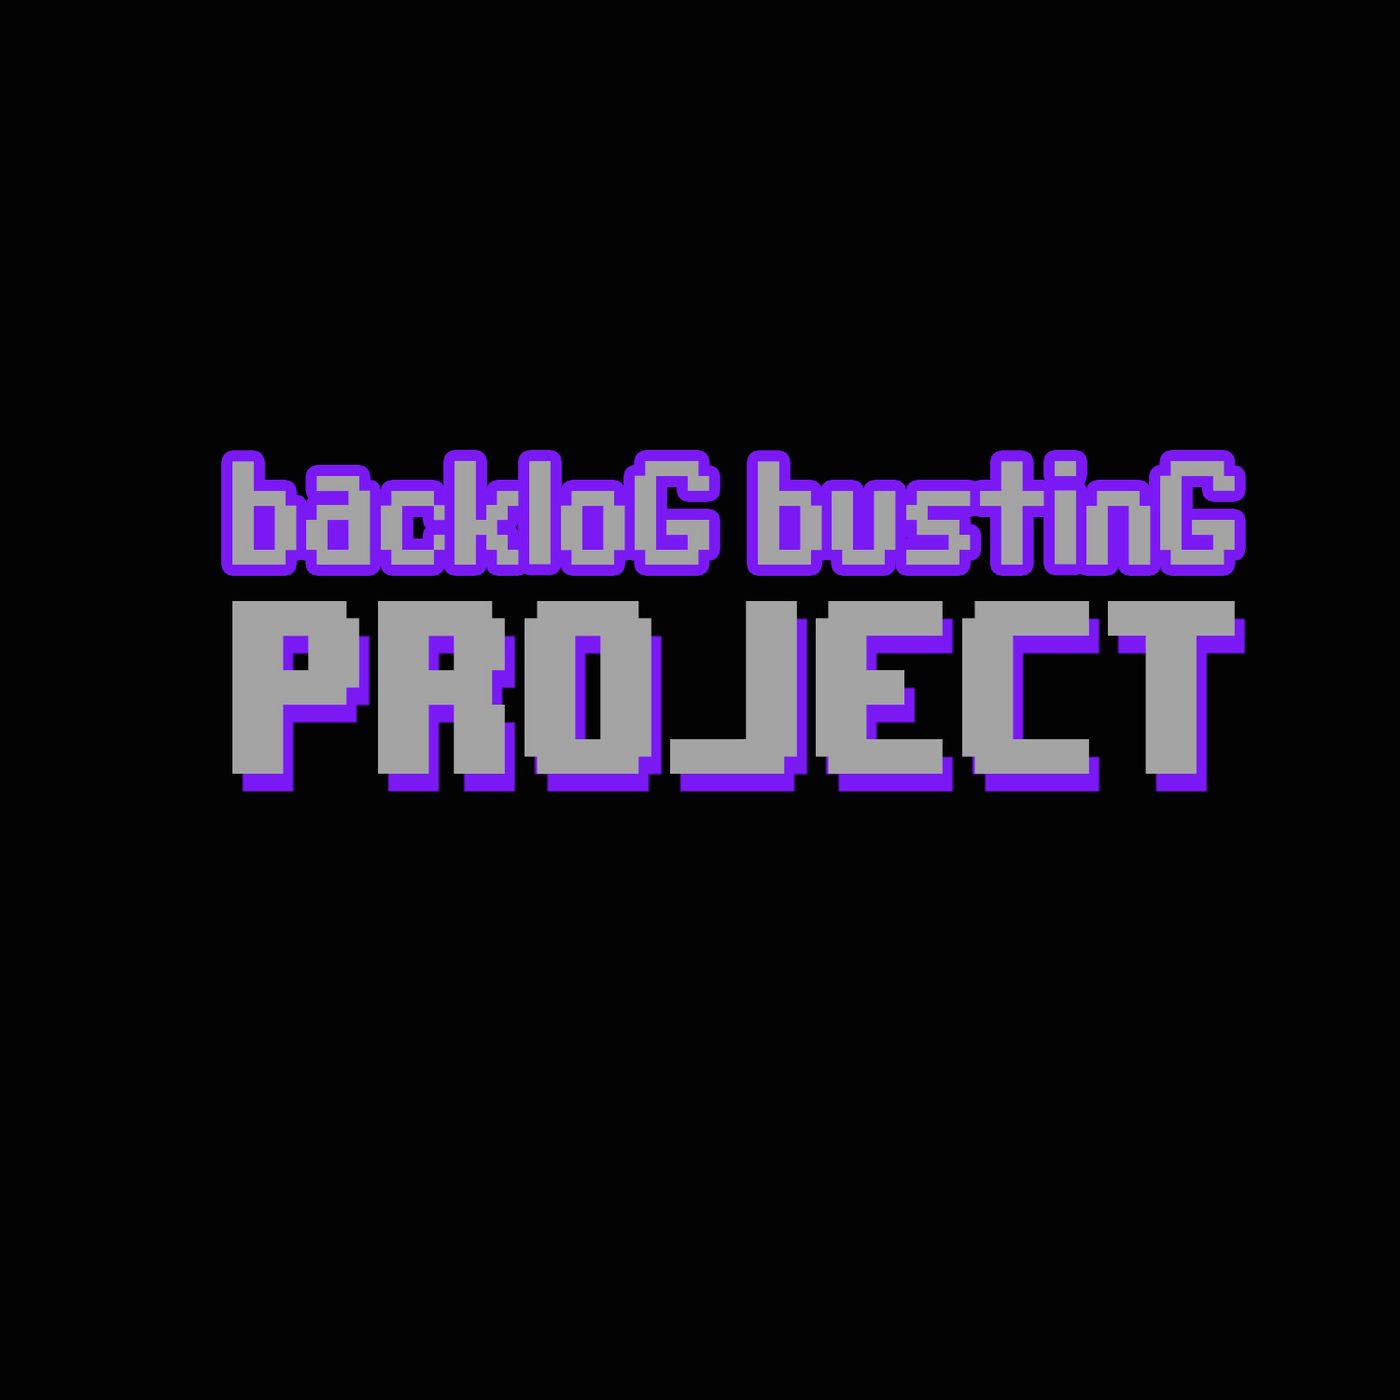 Backlog Busting Project